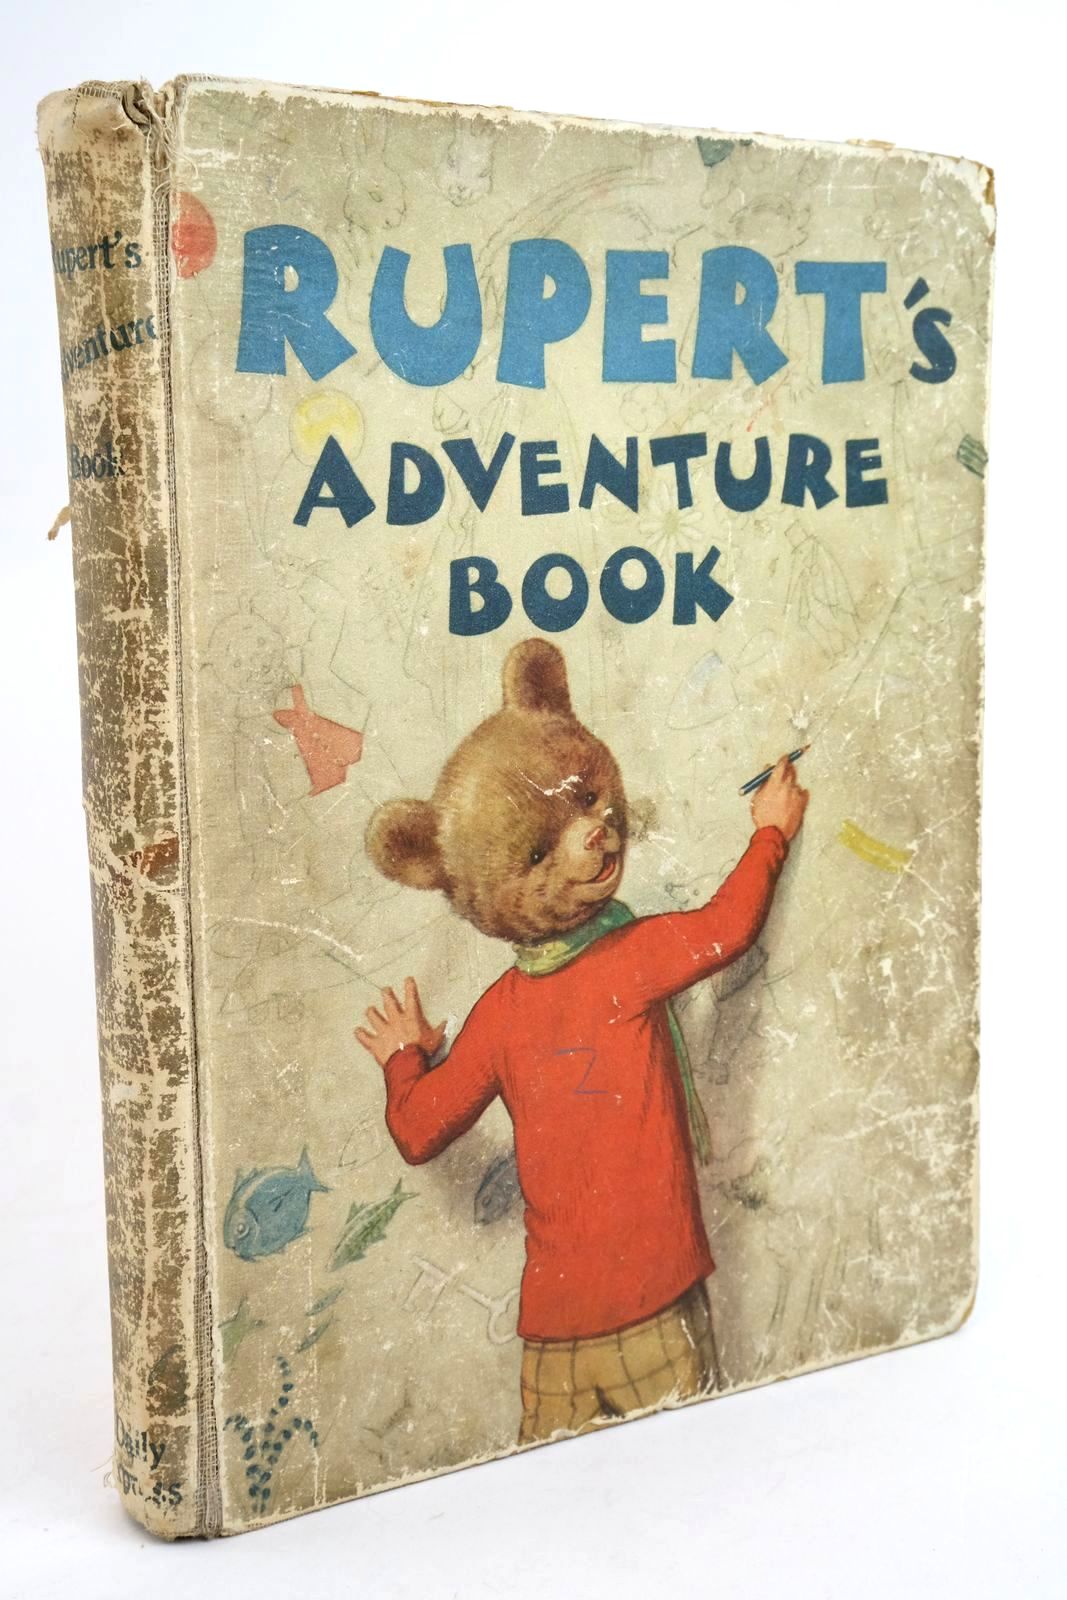 Photo of RUPERT ANNUAL 1940 - RUPERT'S ADVENTURE BOOK- Stock Number: 1321969